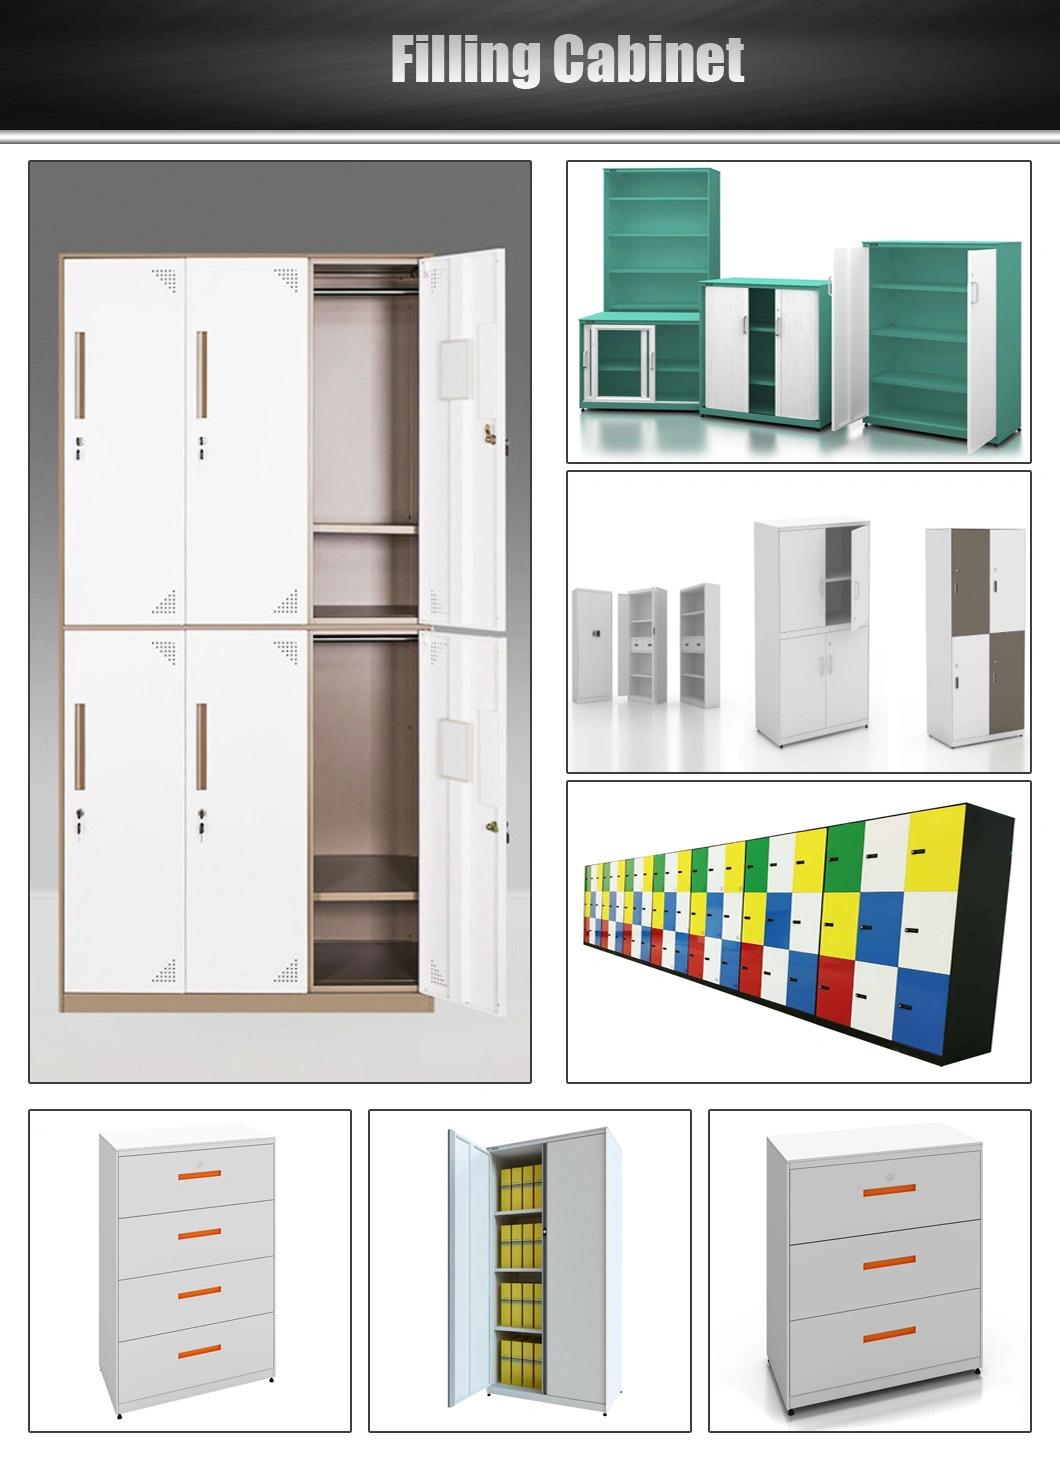 Ample Supply Work Storage Cabinets with Fine Workmanship